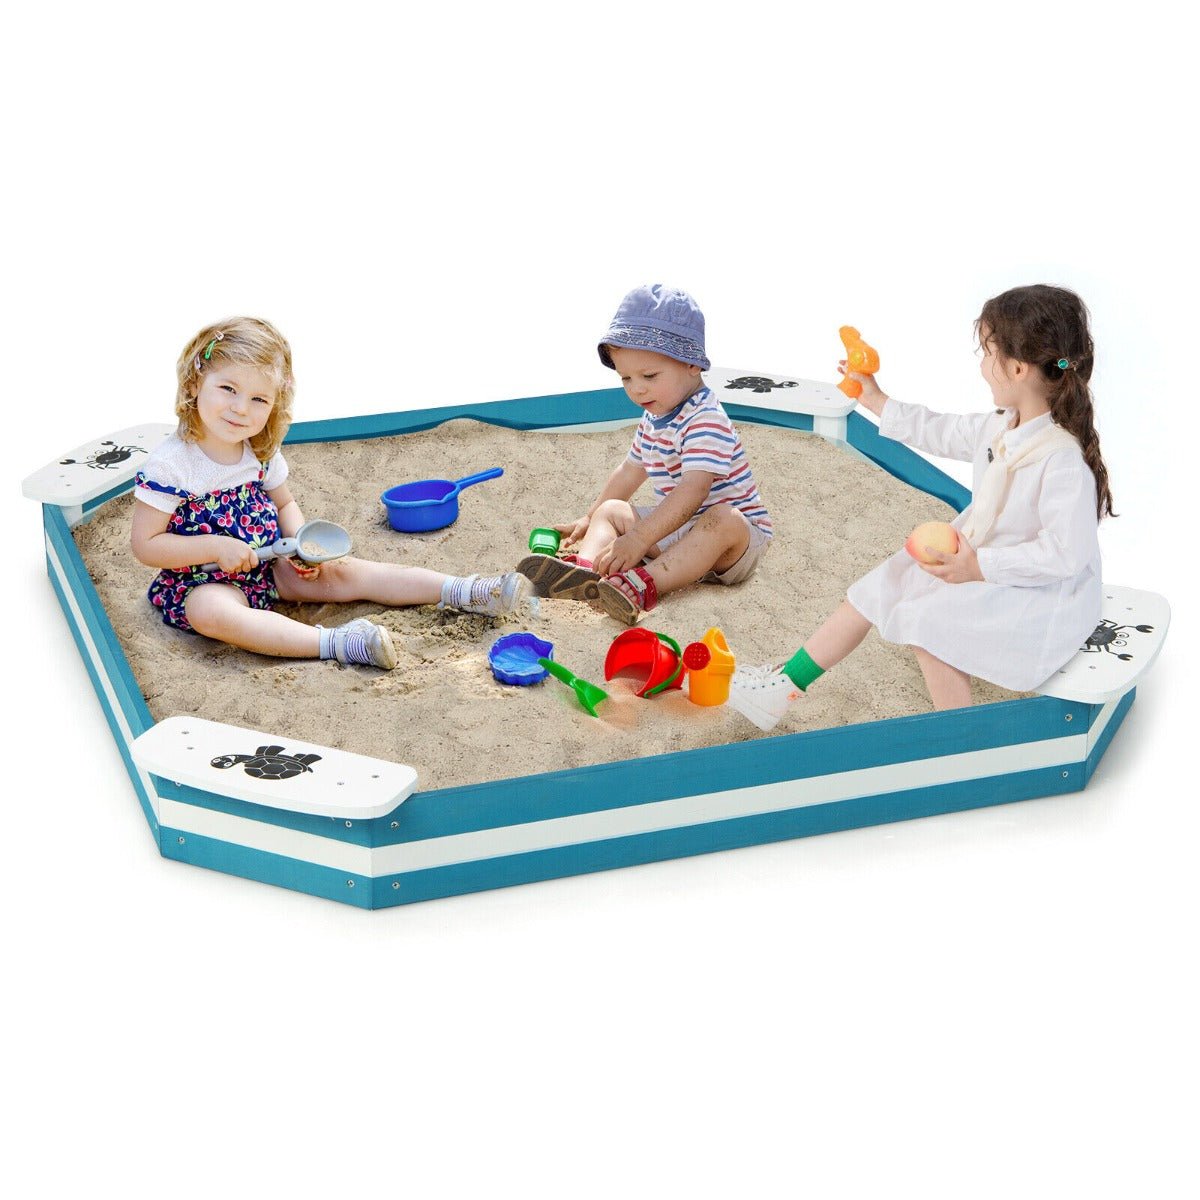 Quality Playtime: Kids Wooden Sandpit for Sale